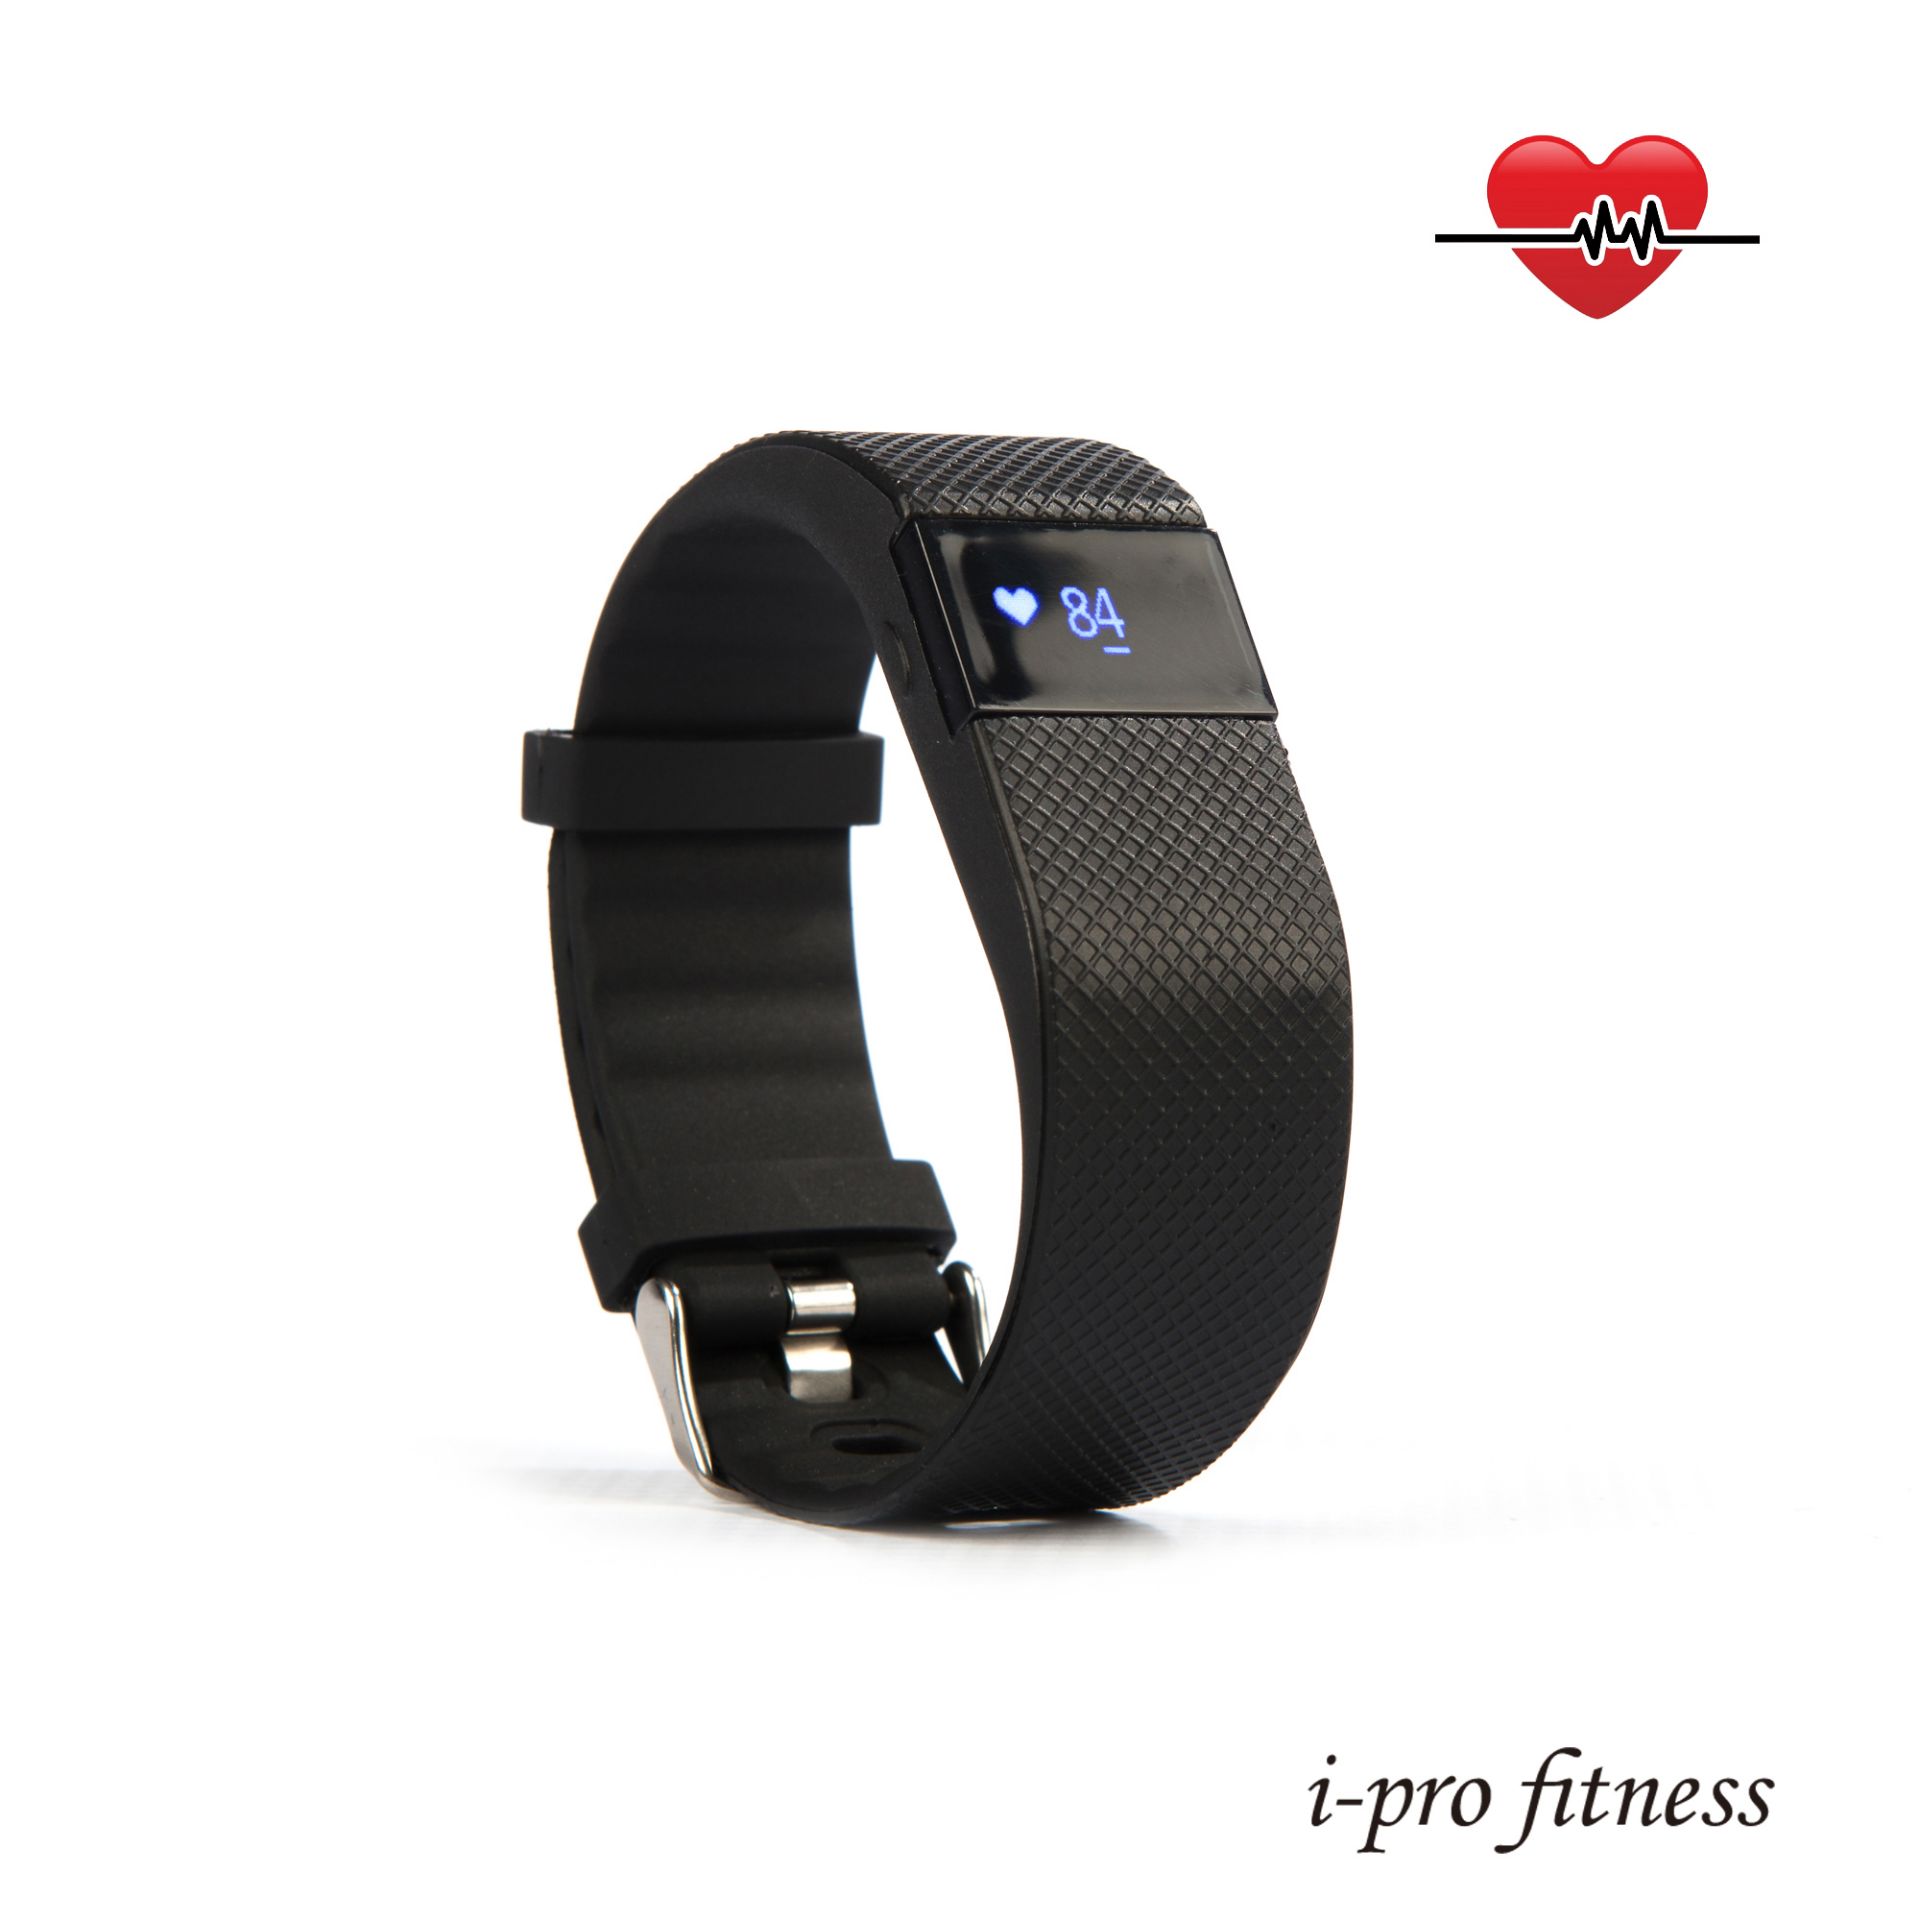 10x Fitness Tracker i-pro fitness, Bluetooth 4.0 Sports Smart Bracelet, Heart Rate Monitor, - Image 2 of 6